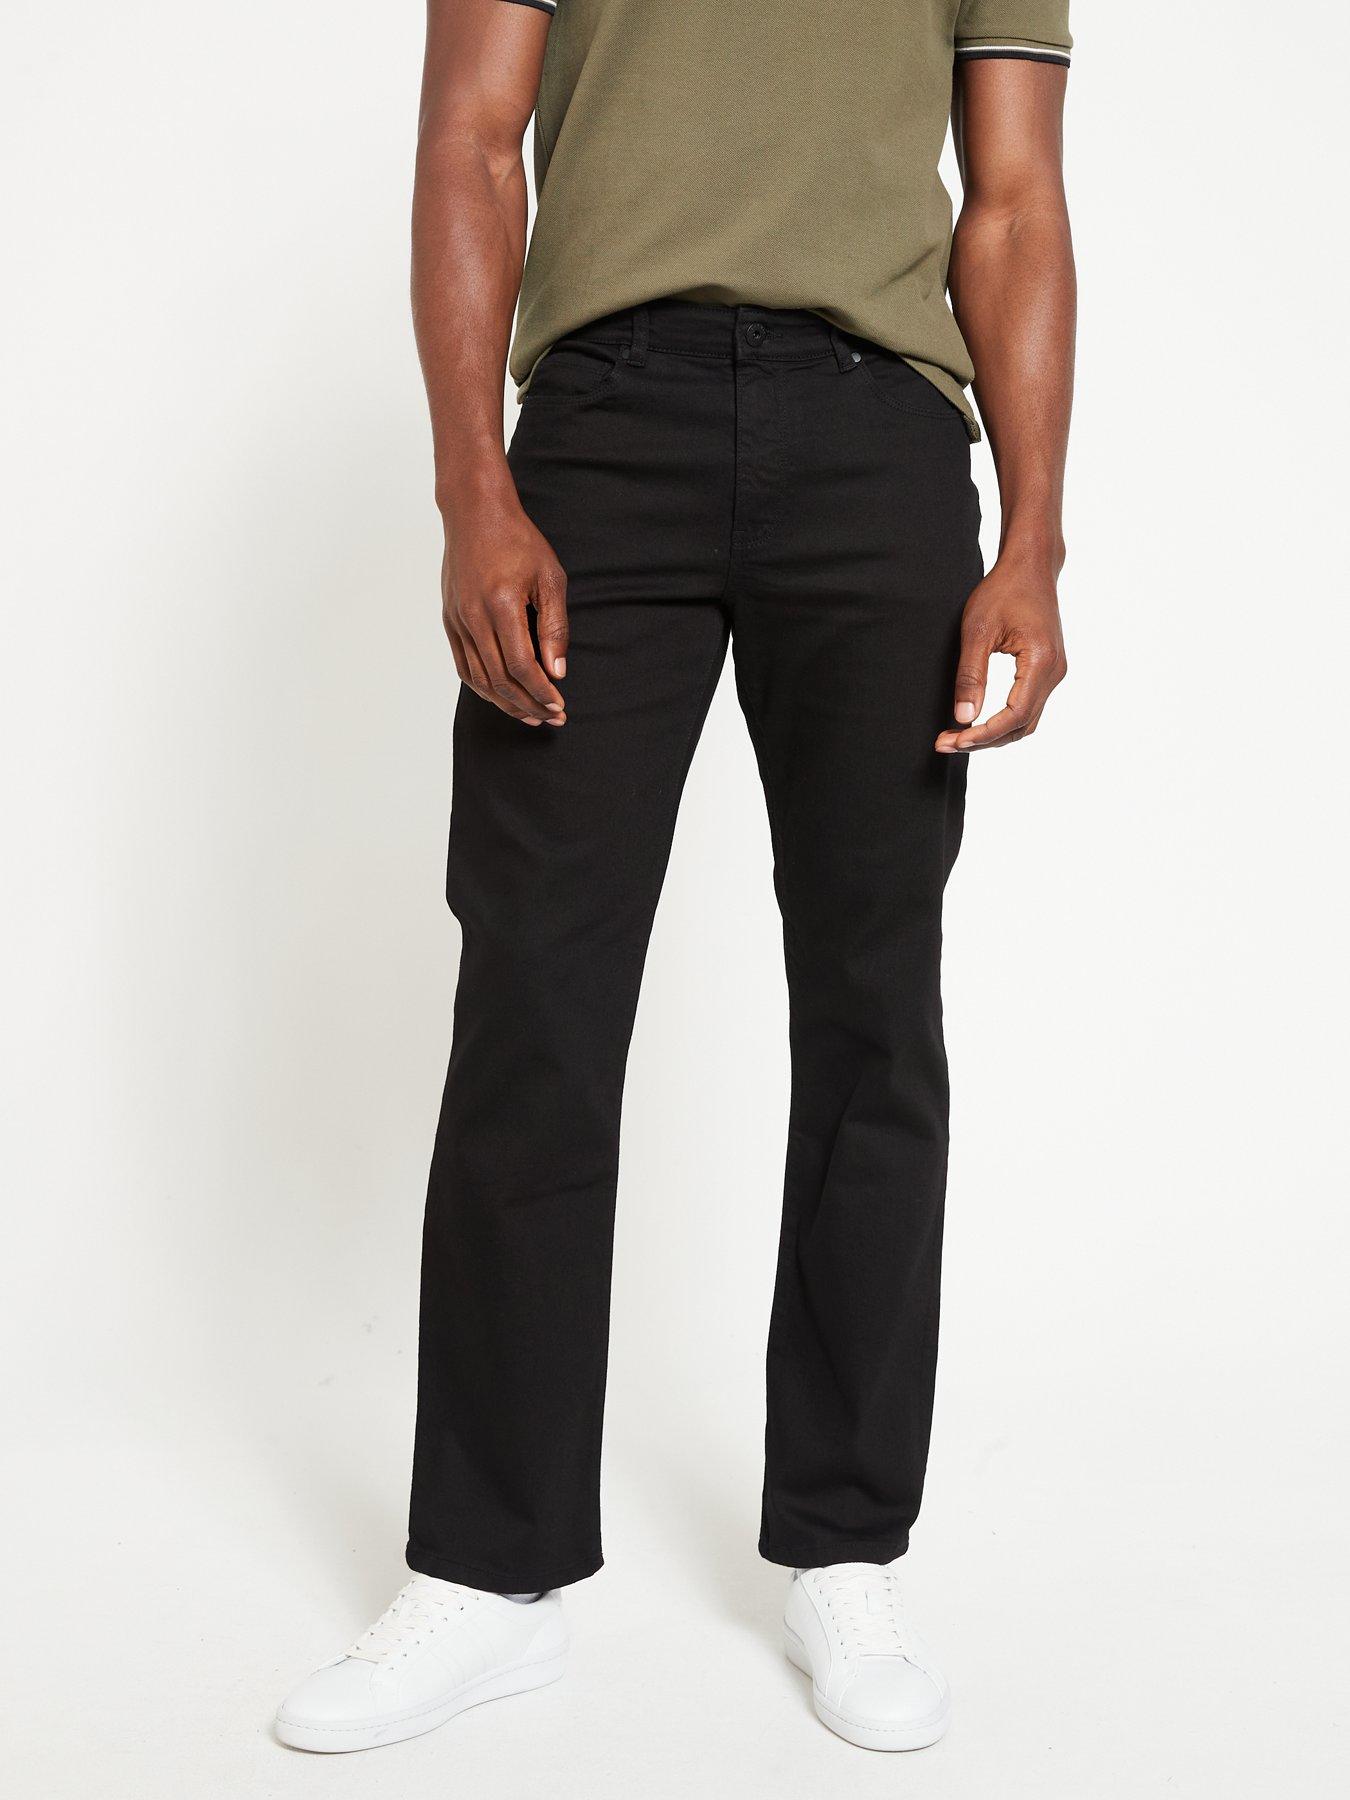 mens black straight leg jeans